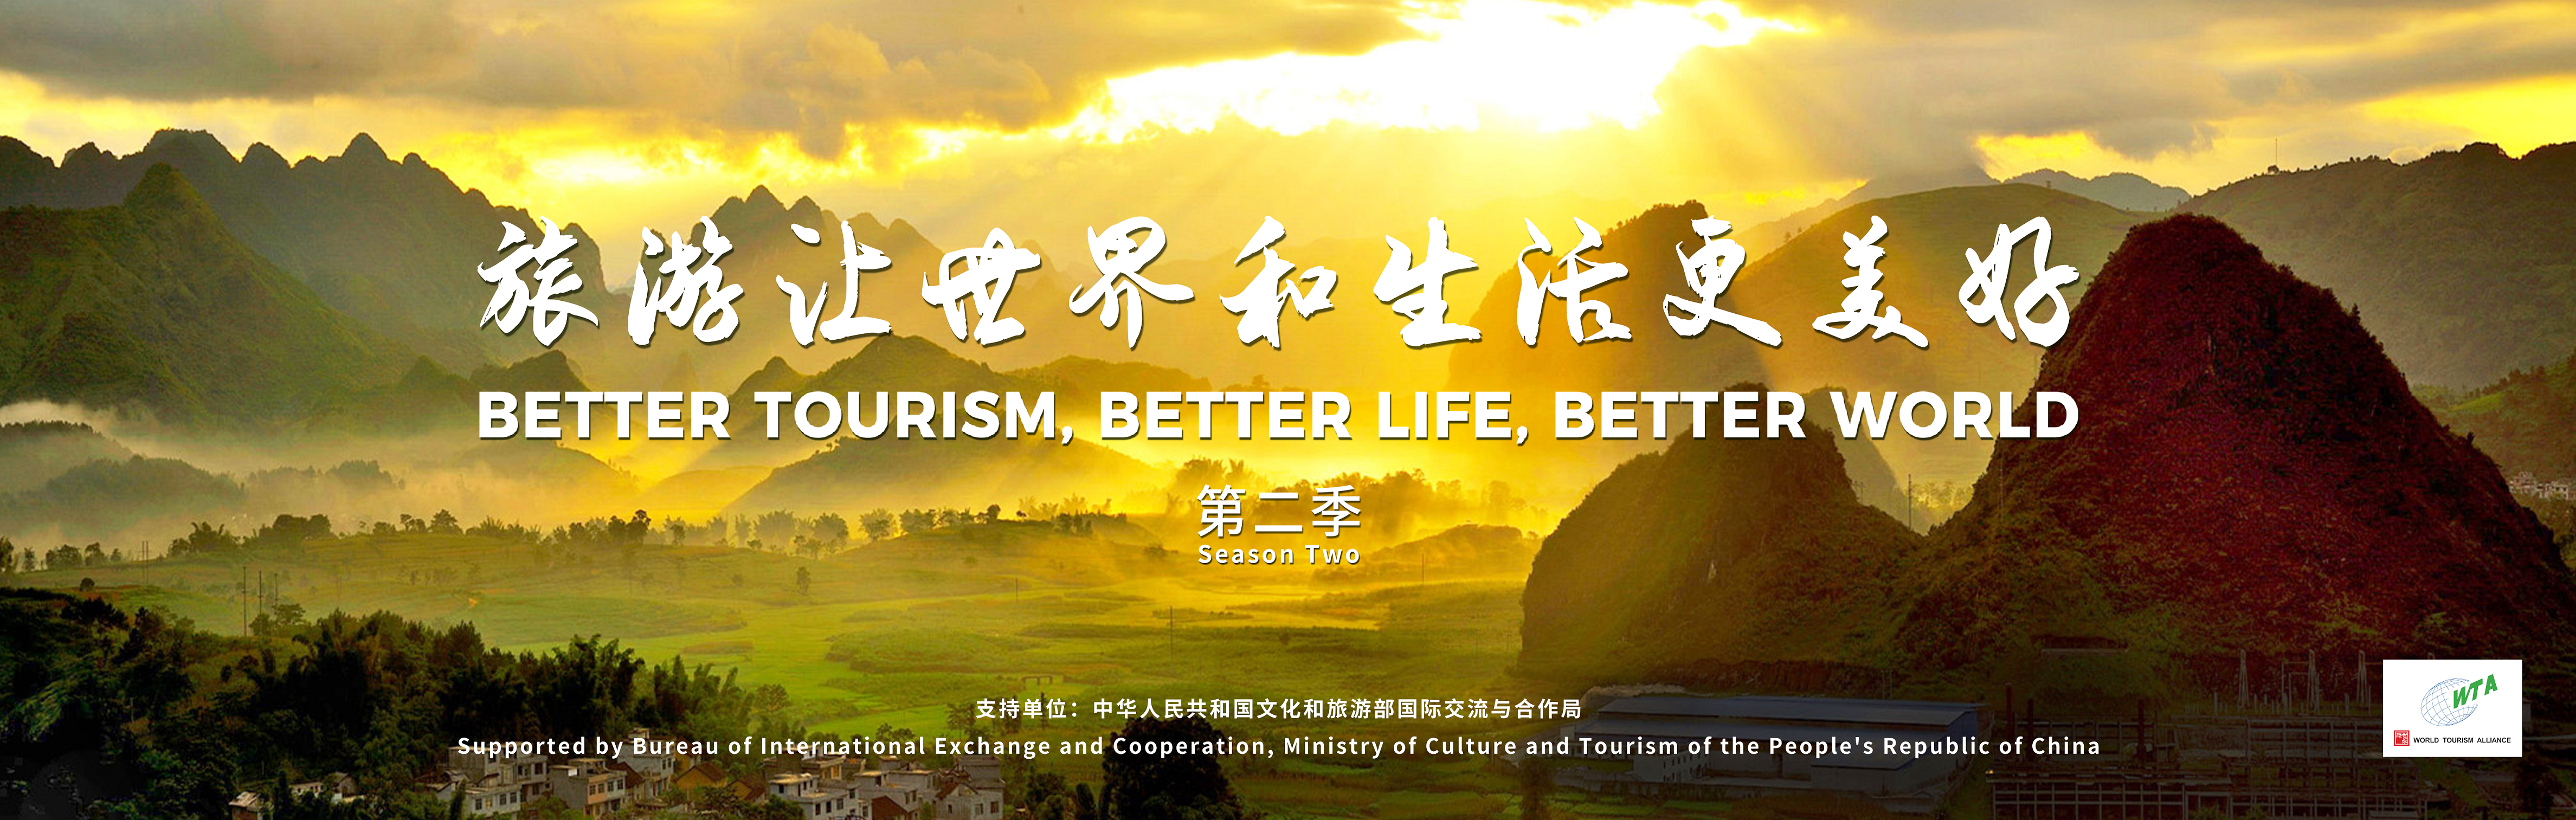 微记录《旅游让世界和生活更美好》第二季 | Better Tourism, Better Life, Better World S2